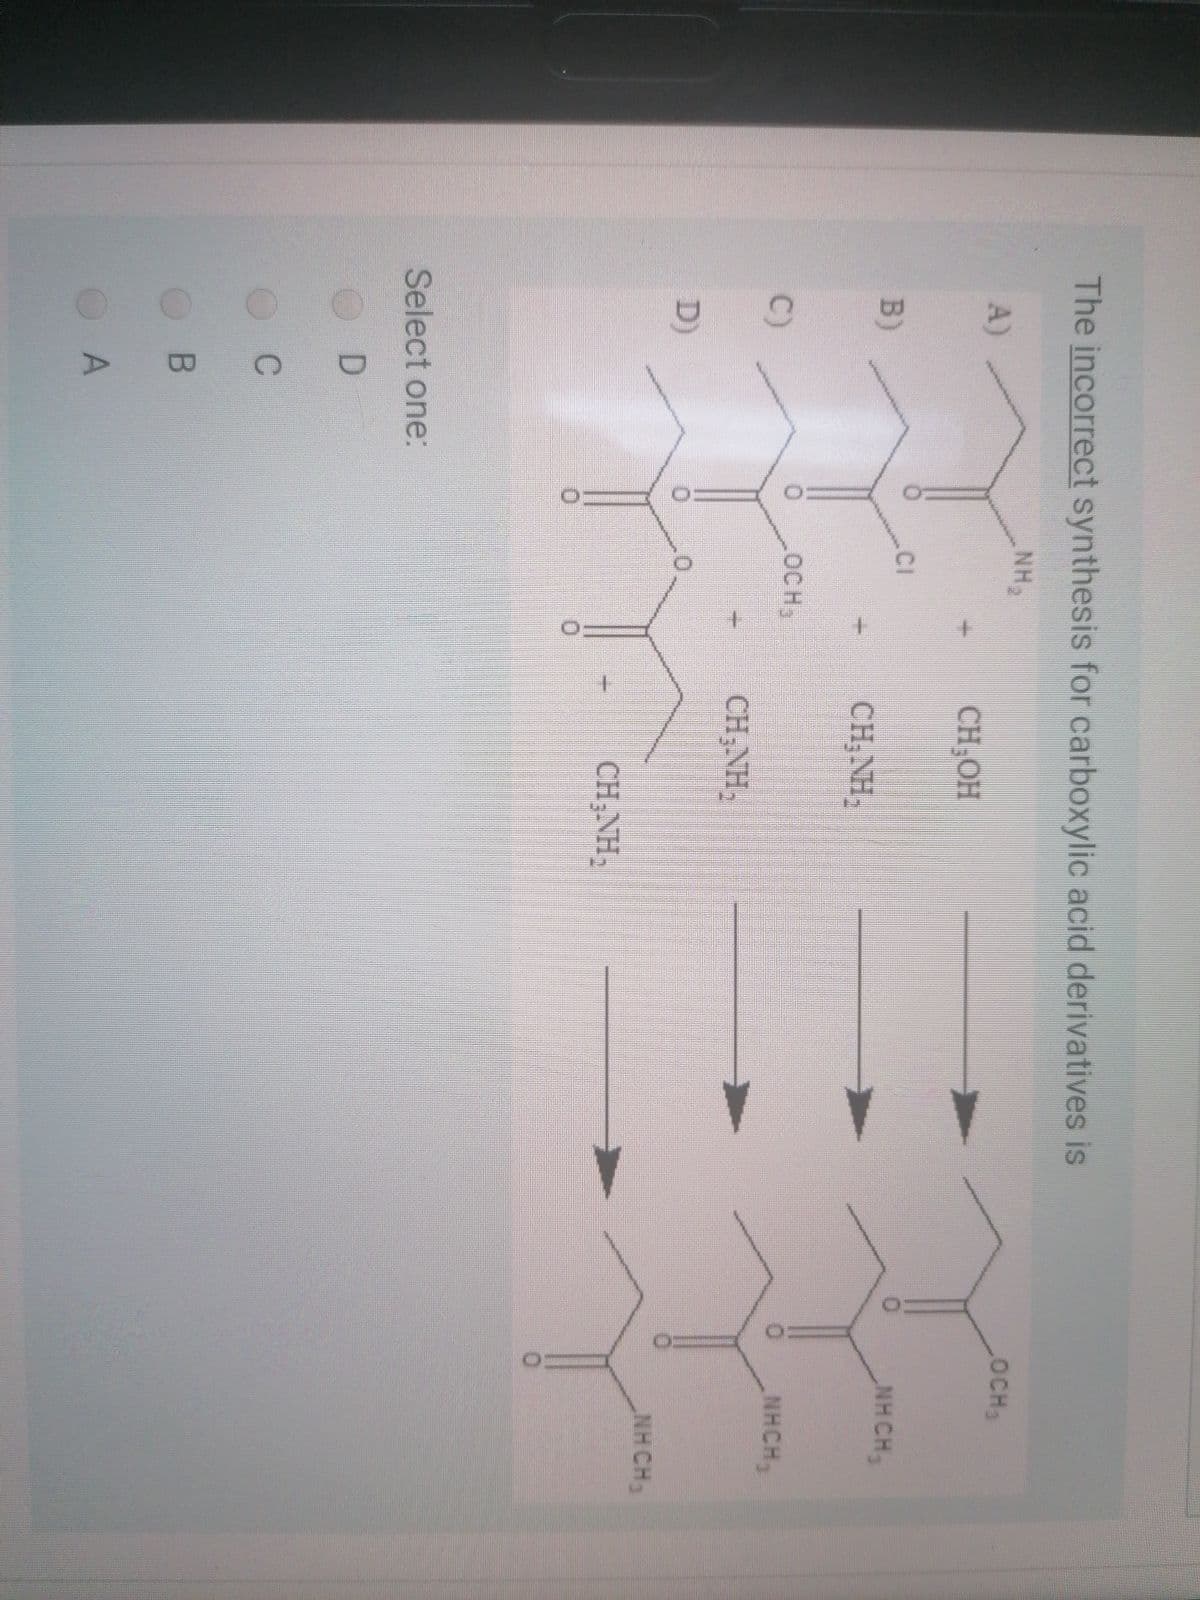 B)
The incorrect synthesis for carboxylic acid derivatives is
OCH3
A)
CH;OH
CI
NHCH
B)
CH;NH,
OCH
NHCH
C)
CH;NH,
D)
NHCH,
CH;NH,
Select one:
OD
